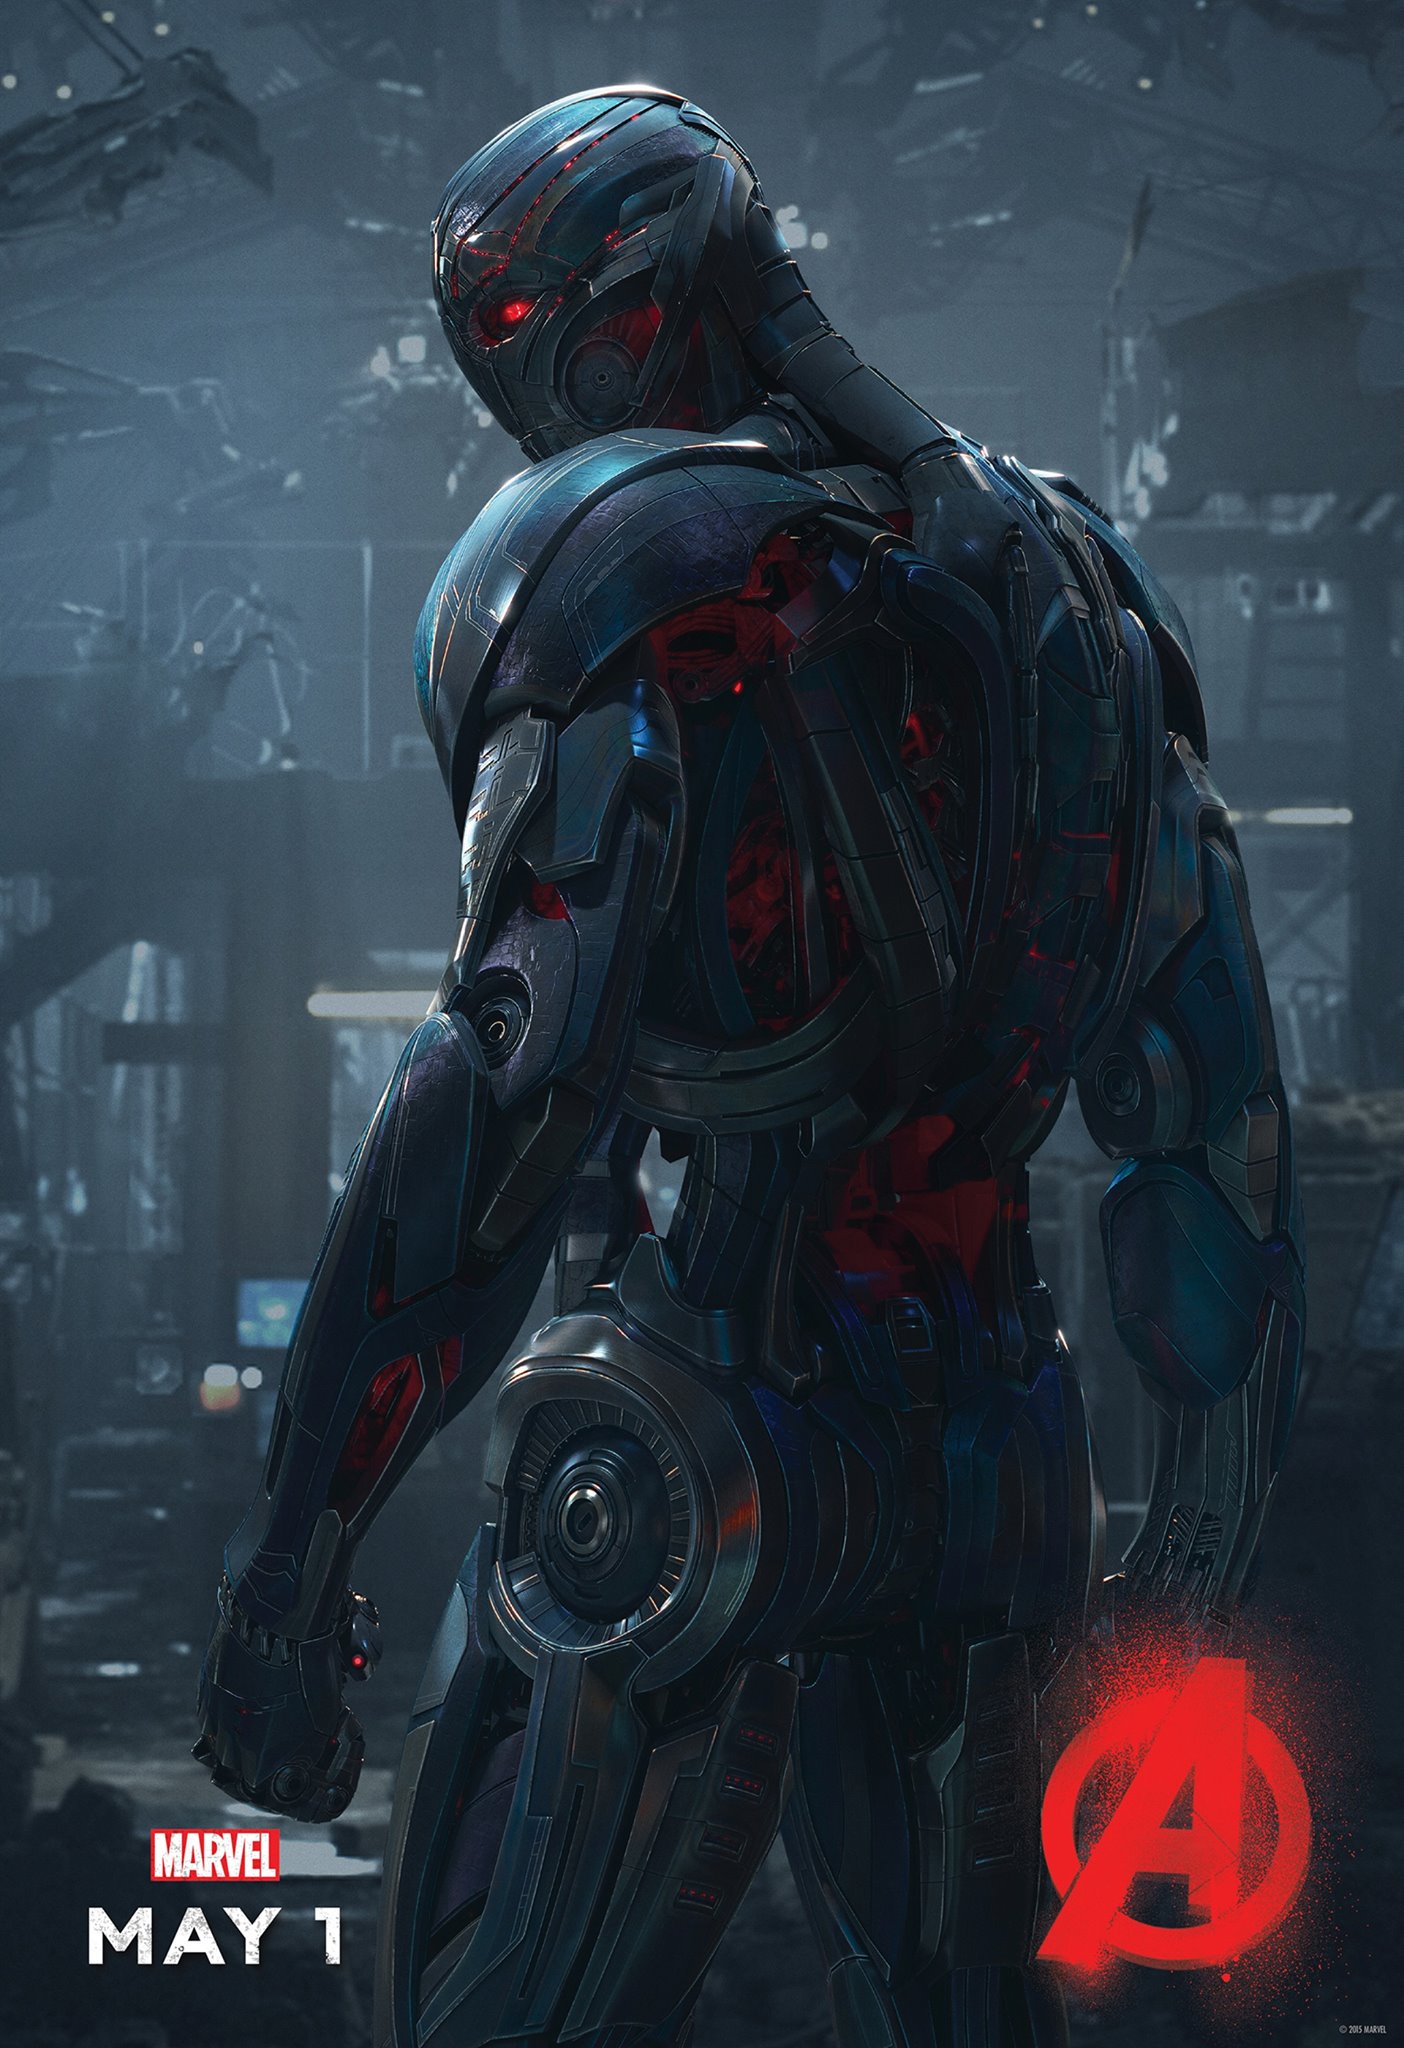 Avengers-Age-of-Ultron-Poster-Ultron.jpg